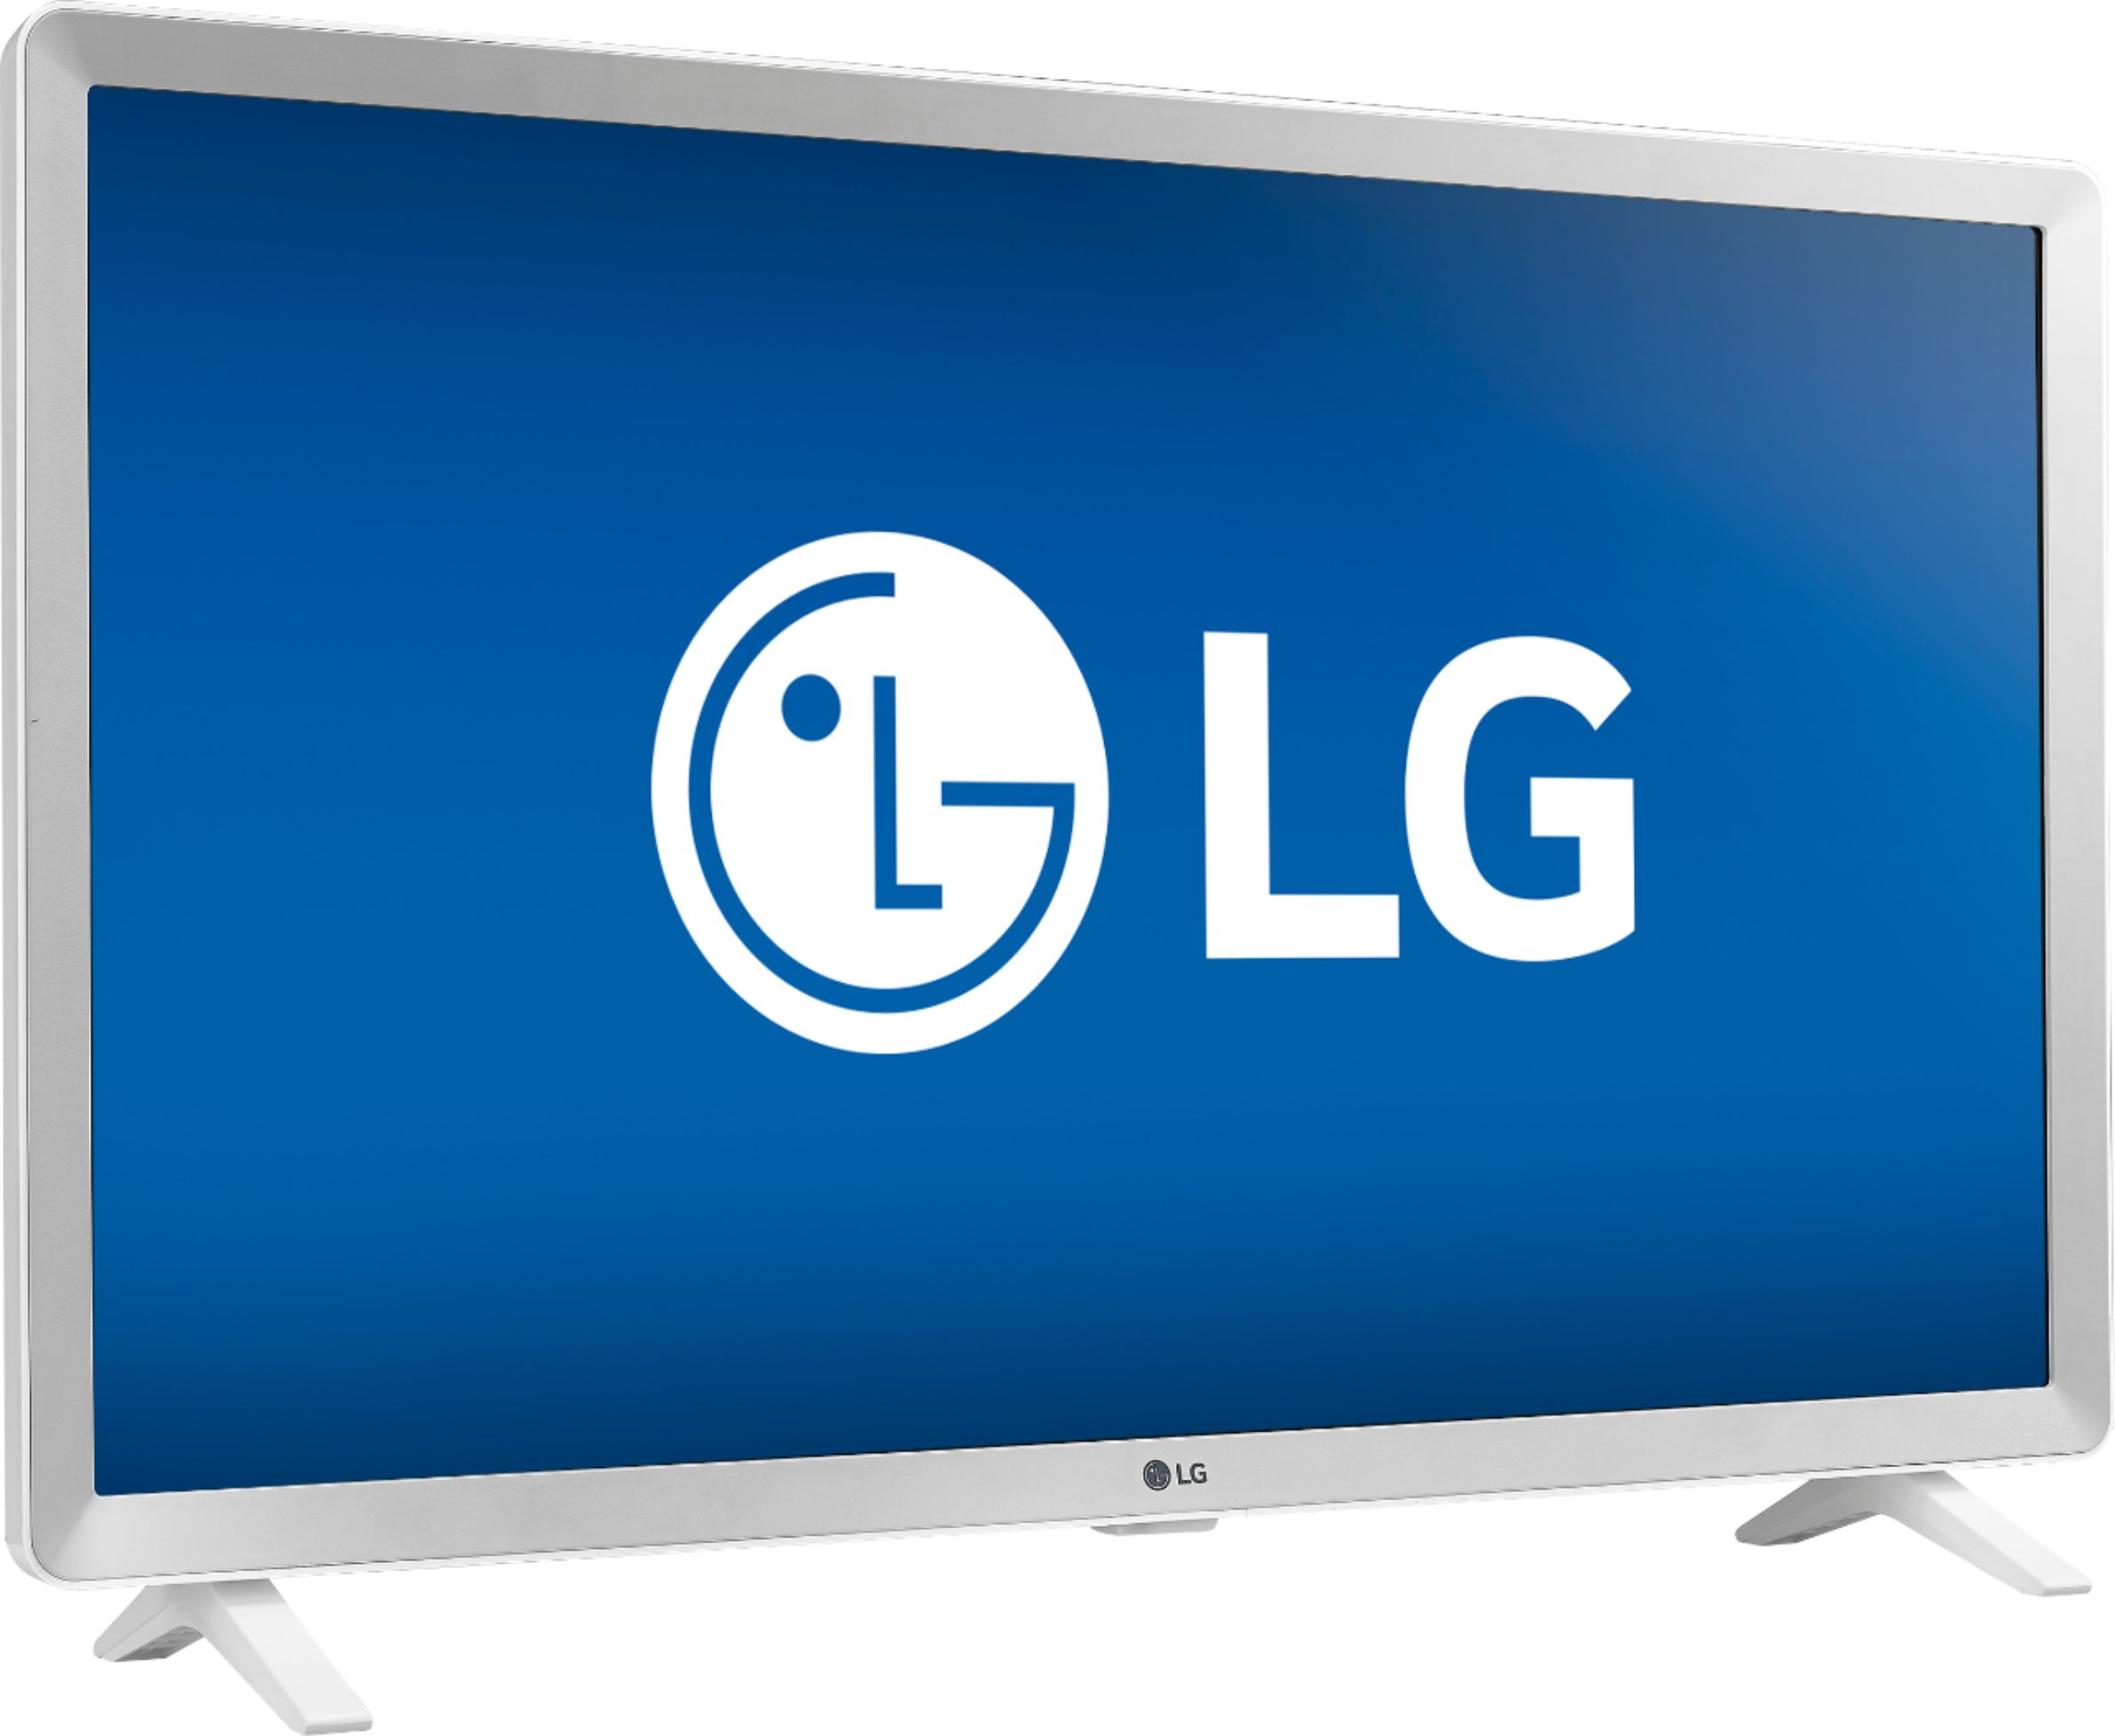 Angle View: LG - 24" Class LED HD Smart webOS TV